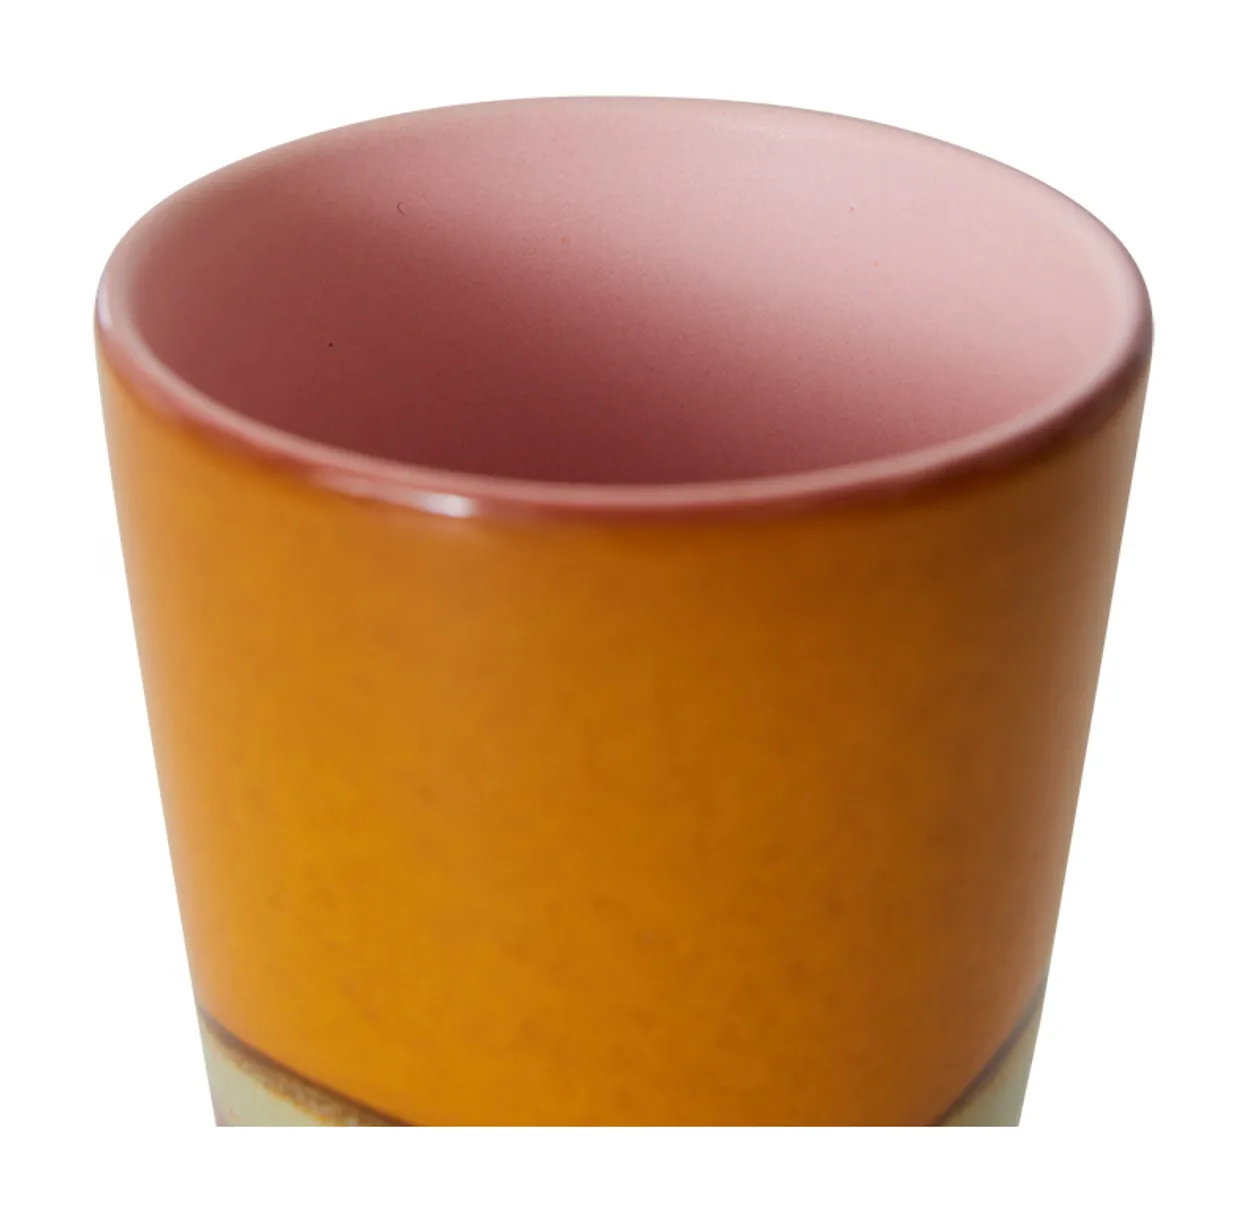 70s ceramics: latte mug, clay